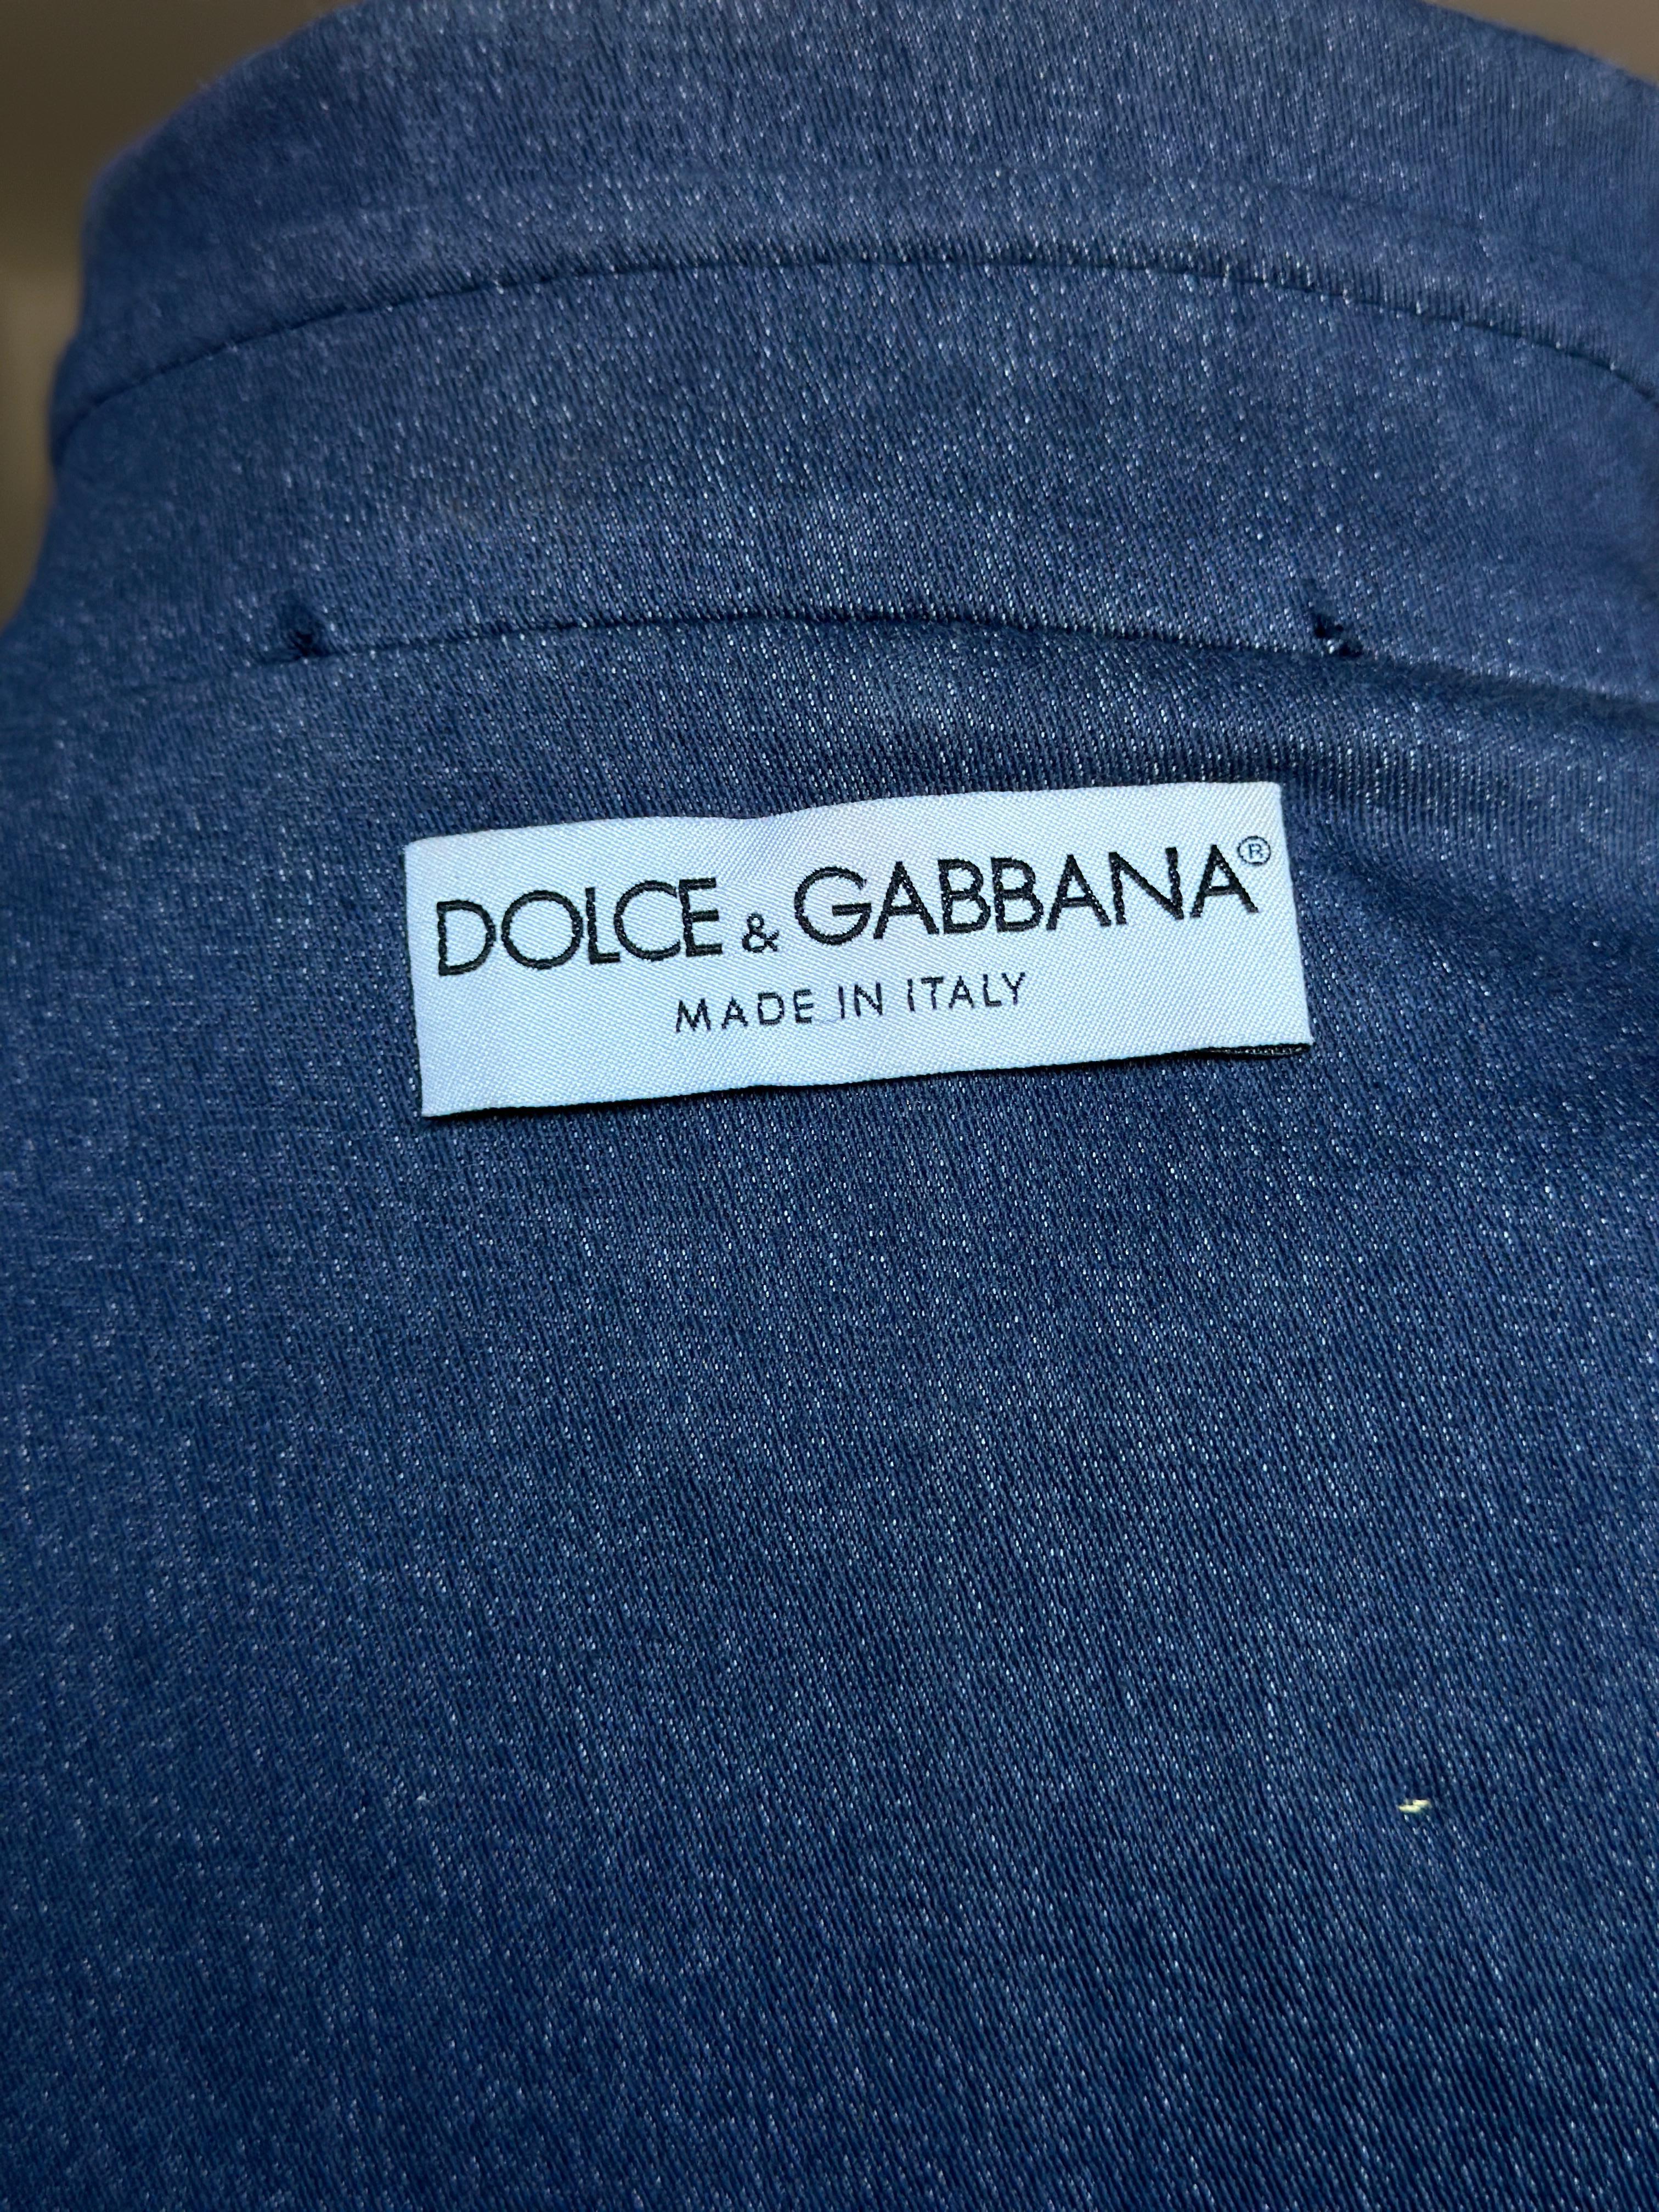 Women's Vintage Dolce&Gabbana Denim Jacket 90s For Sale